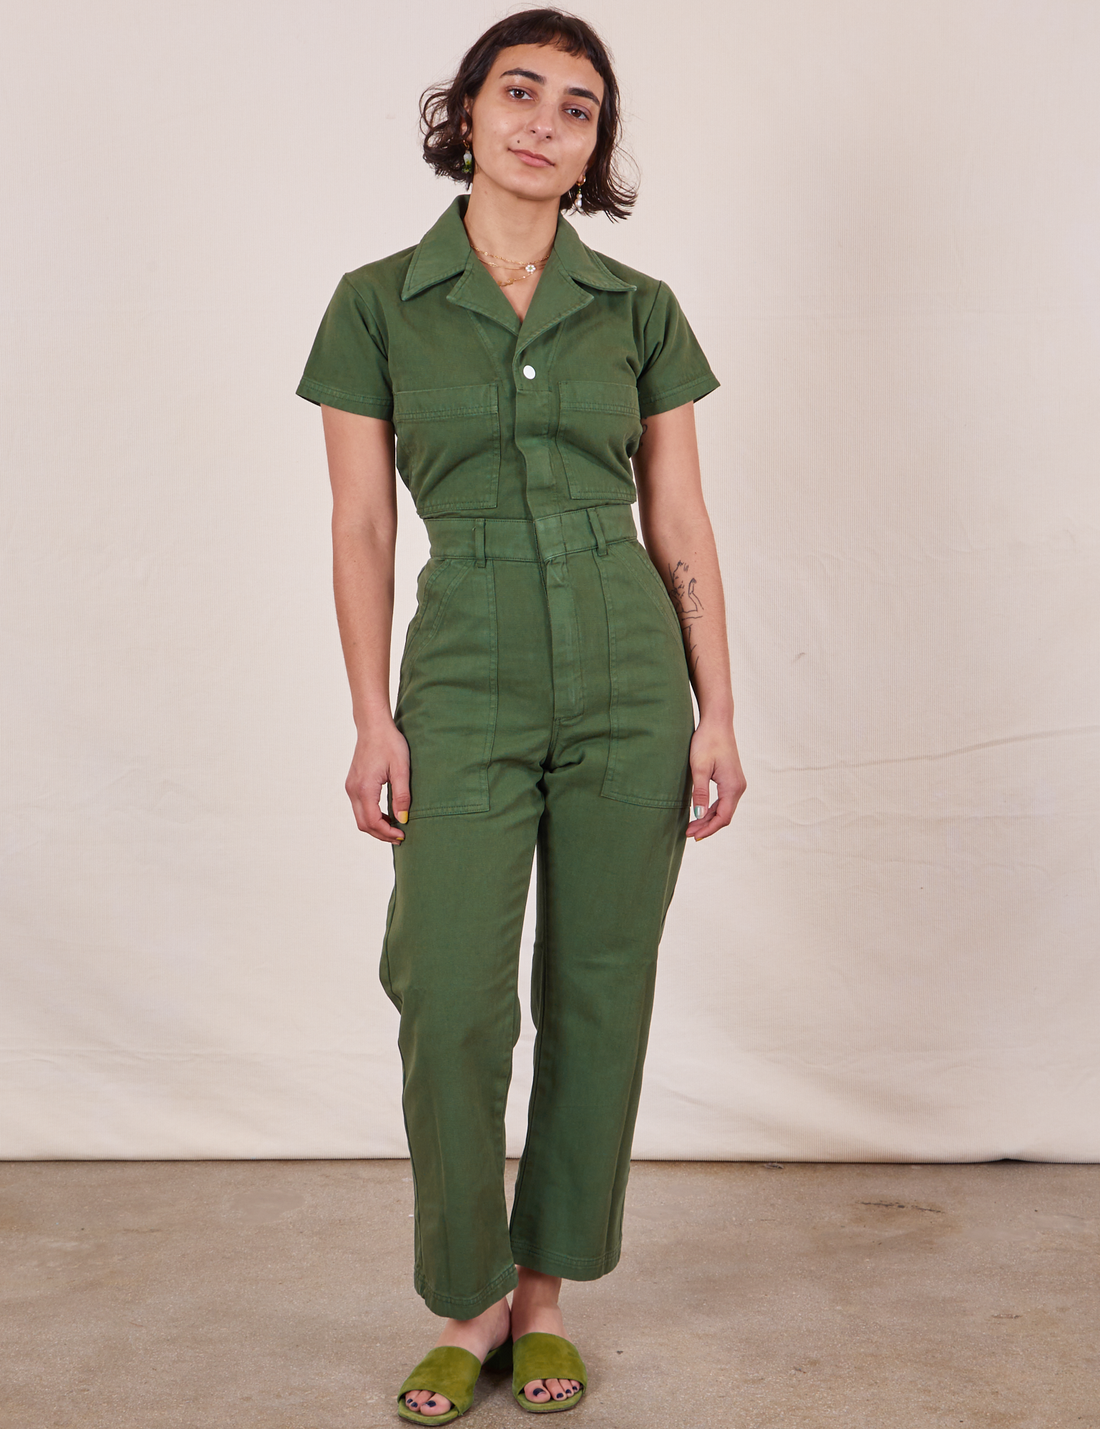 Soraya is 5’2” and wearing XXS Petite Short Sleeve Jumpsuit in Dark Emerald Green